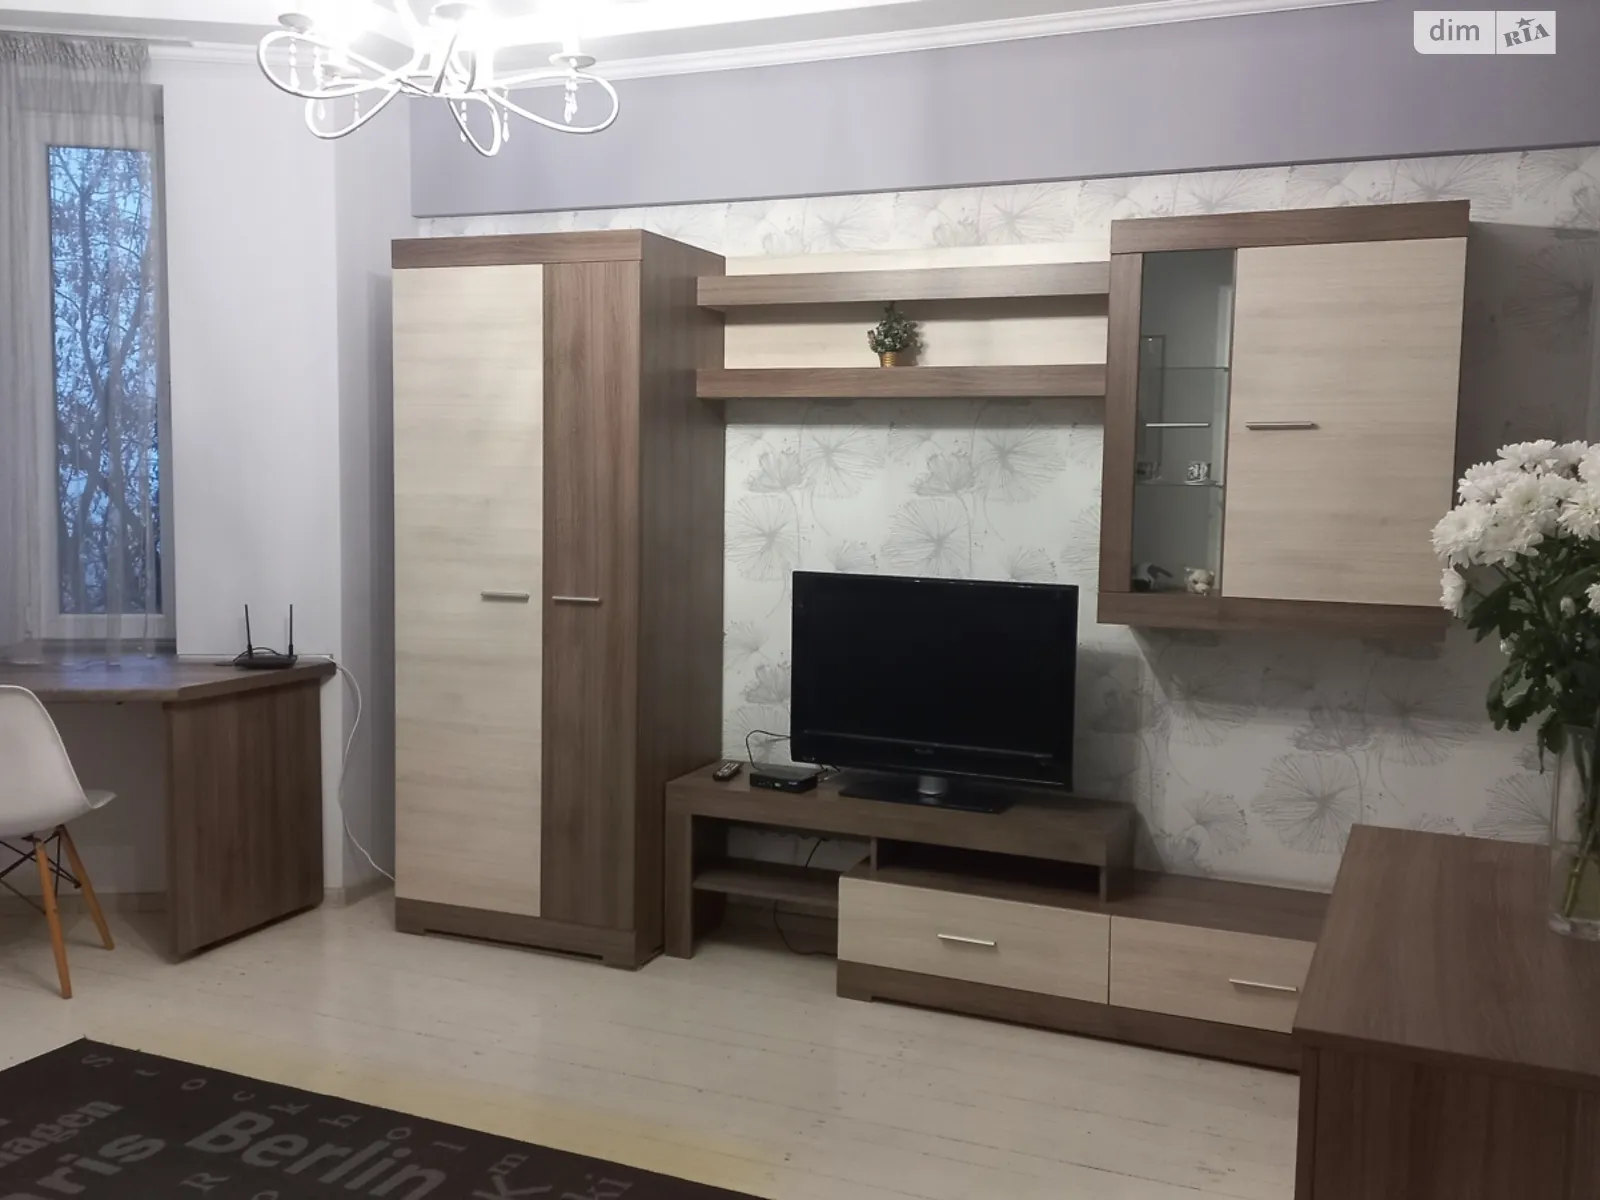 1-кімнатна квартира у Запоріжжі, цена: 990 грн